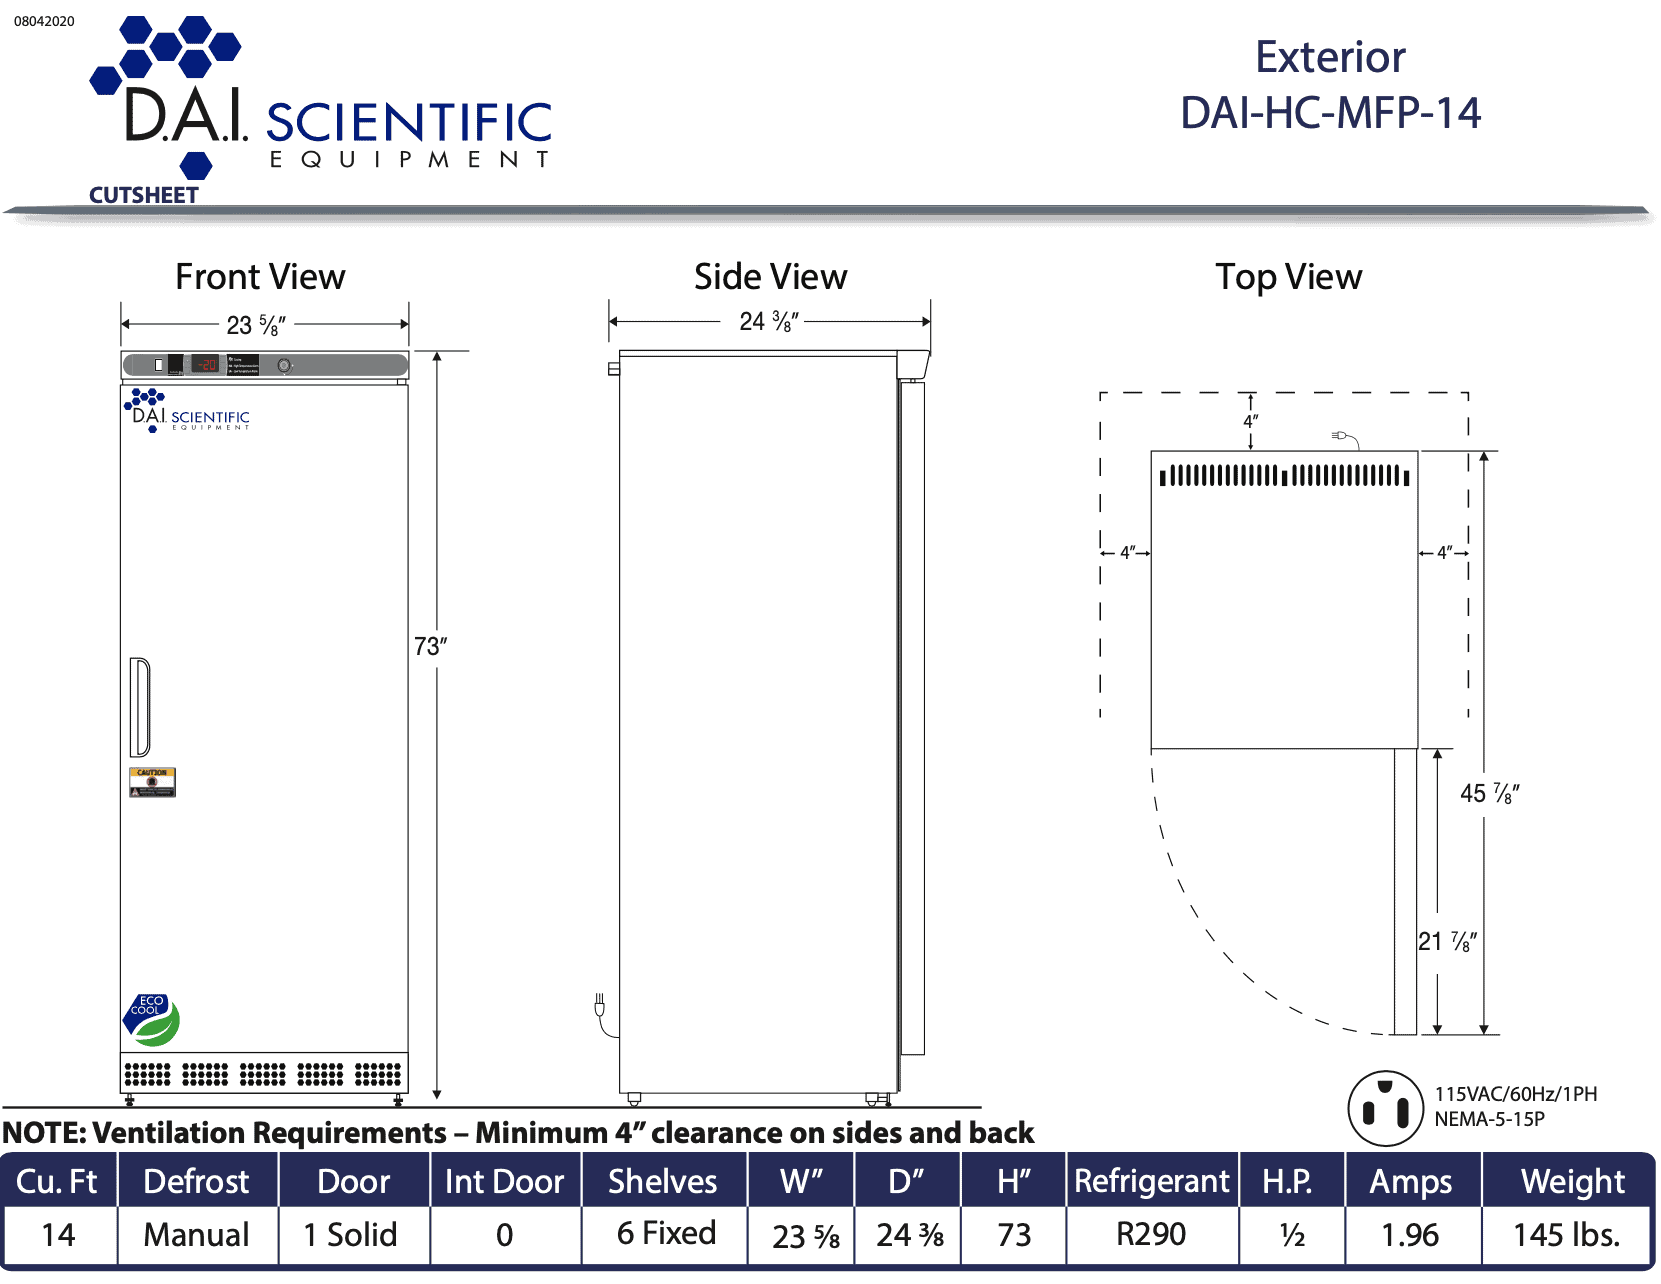 DAI-HC-MFP-14 Ext Cutsheet